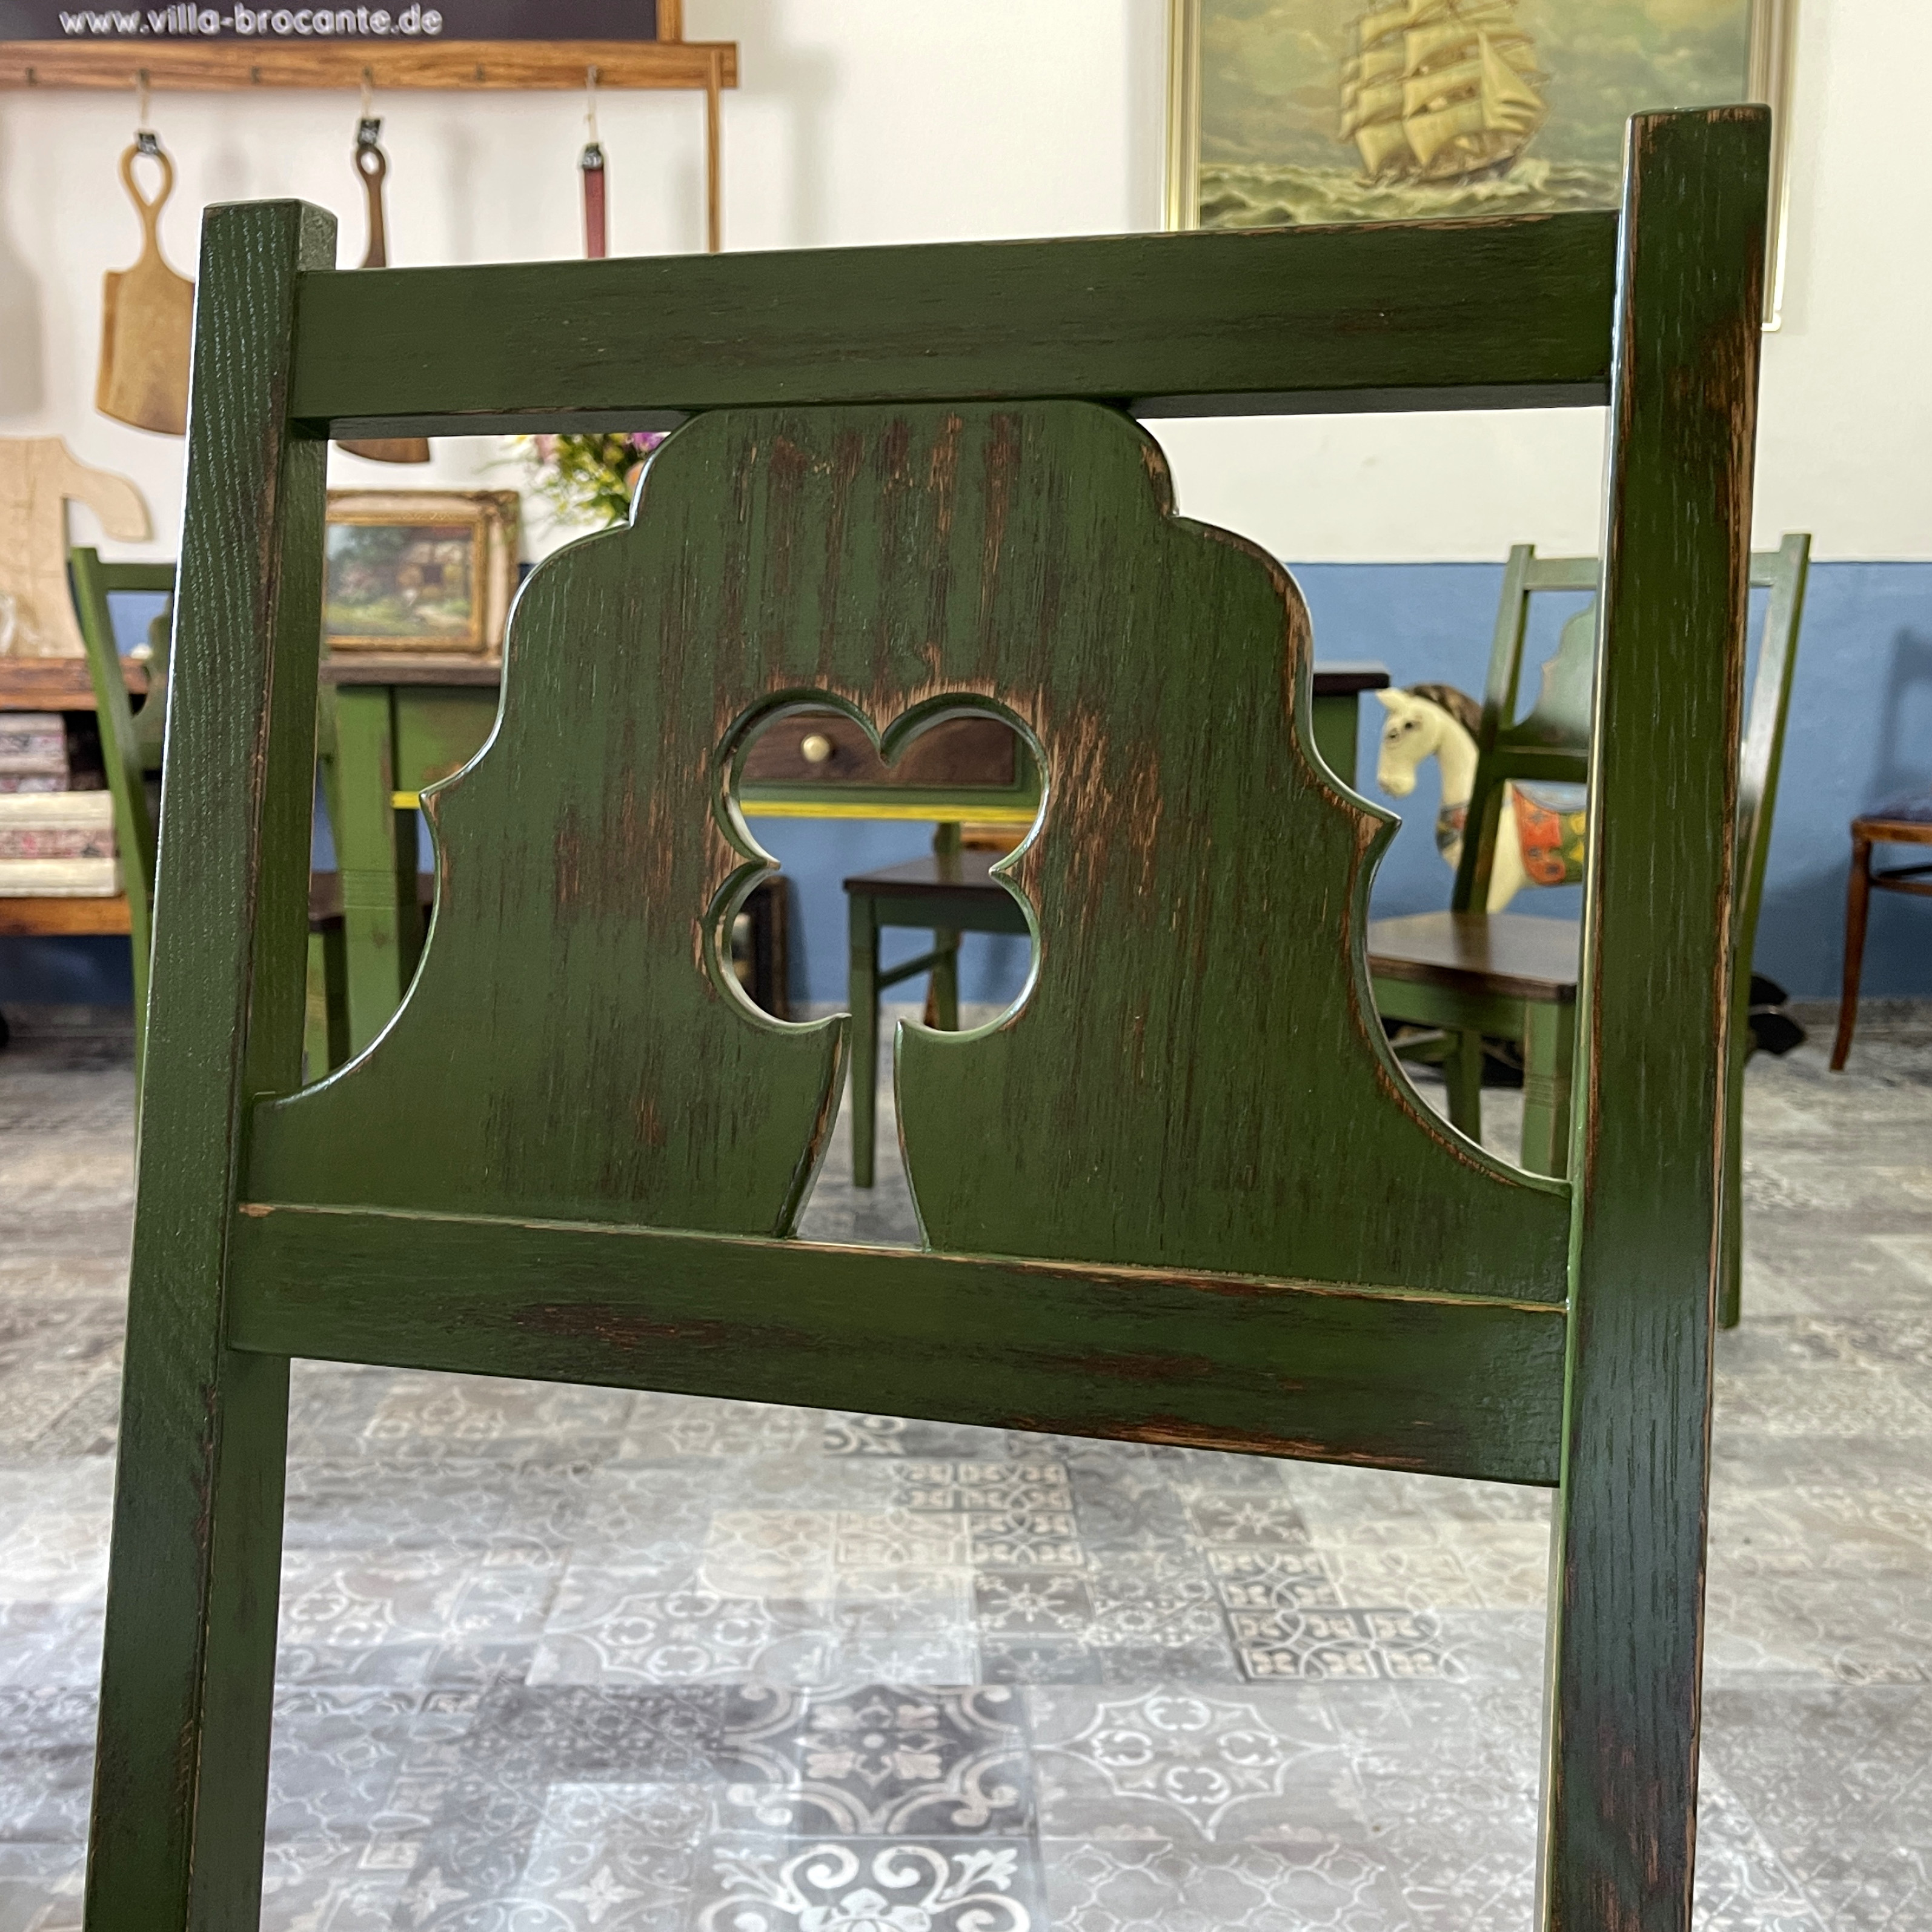 Holzstuhl antik rustikal Eiche grün Vintage massiv verzierte Lehne